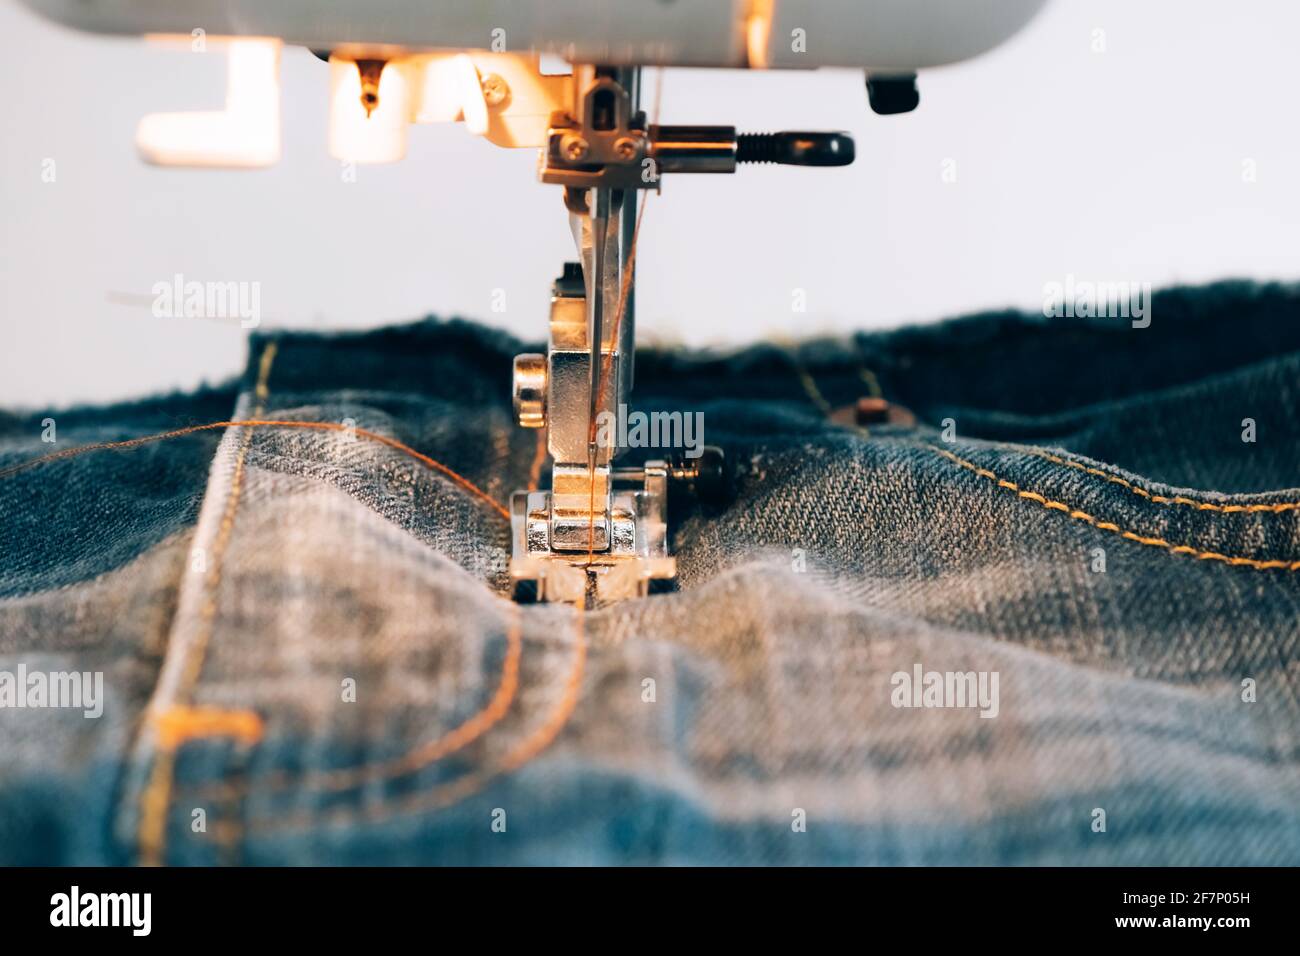 Máquina de coser moderna para reparar o coser ropa proceso de costura de  tela vaquera. Equipo de costura enfoque selectivo Fotografía de stock -  Alamy